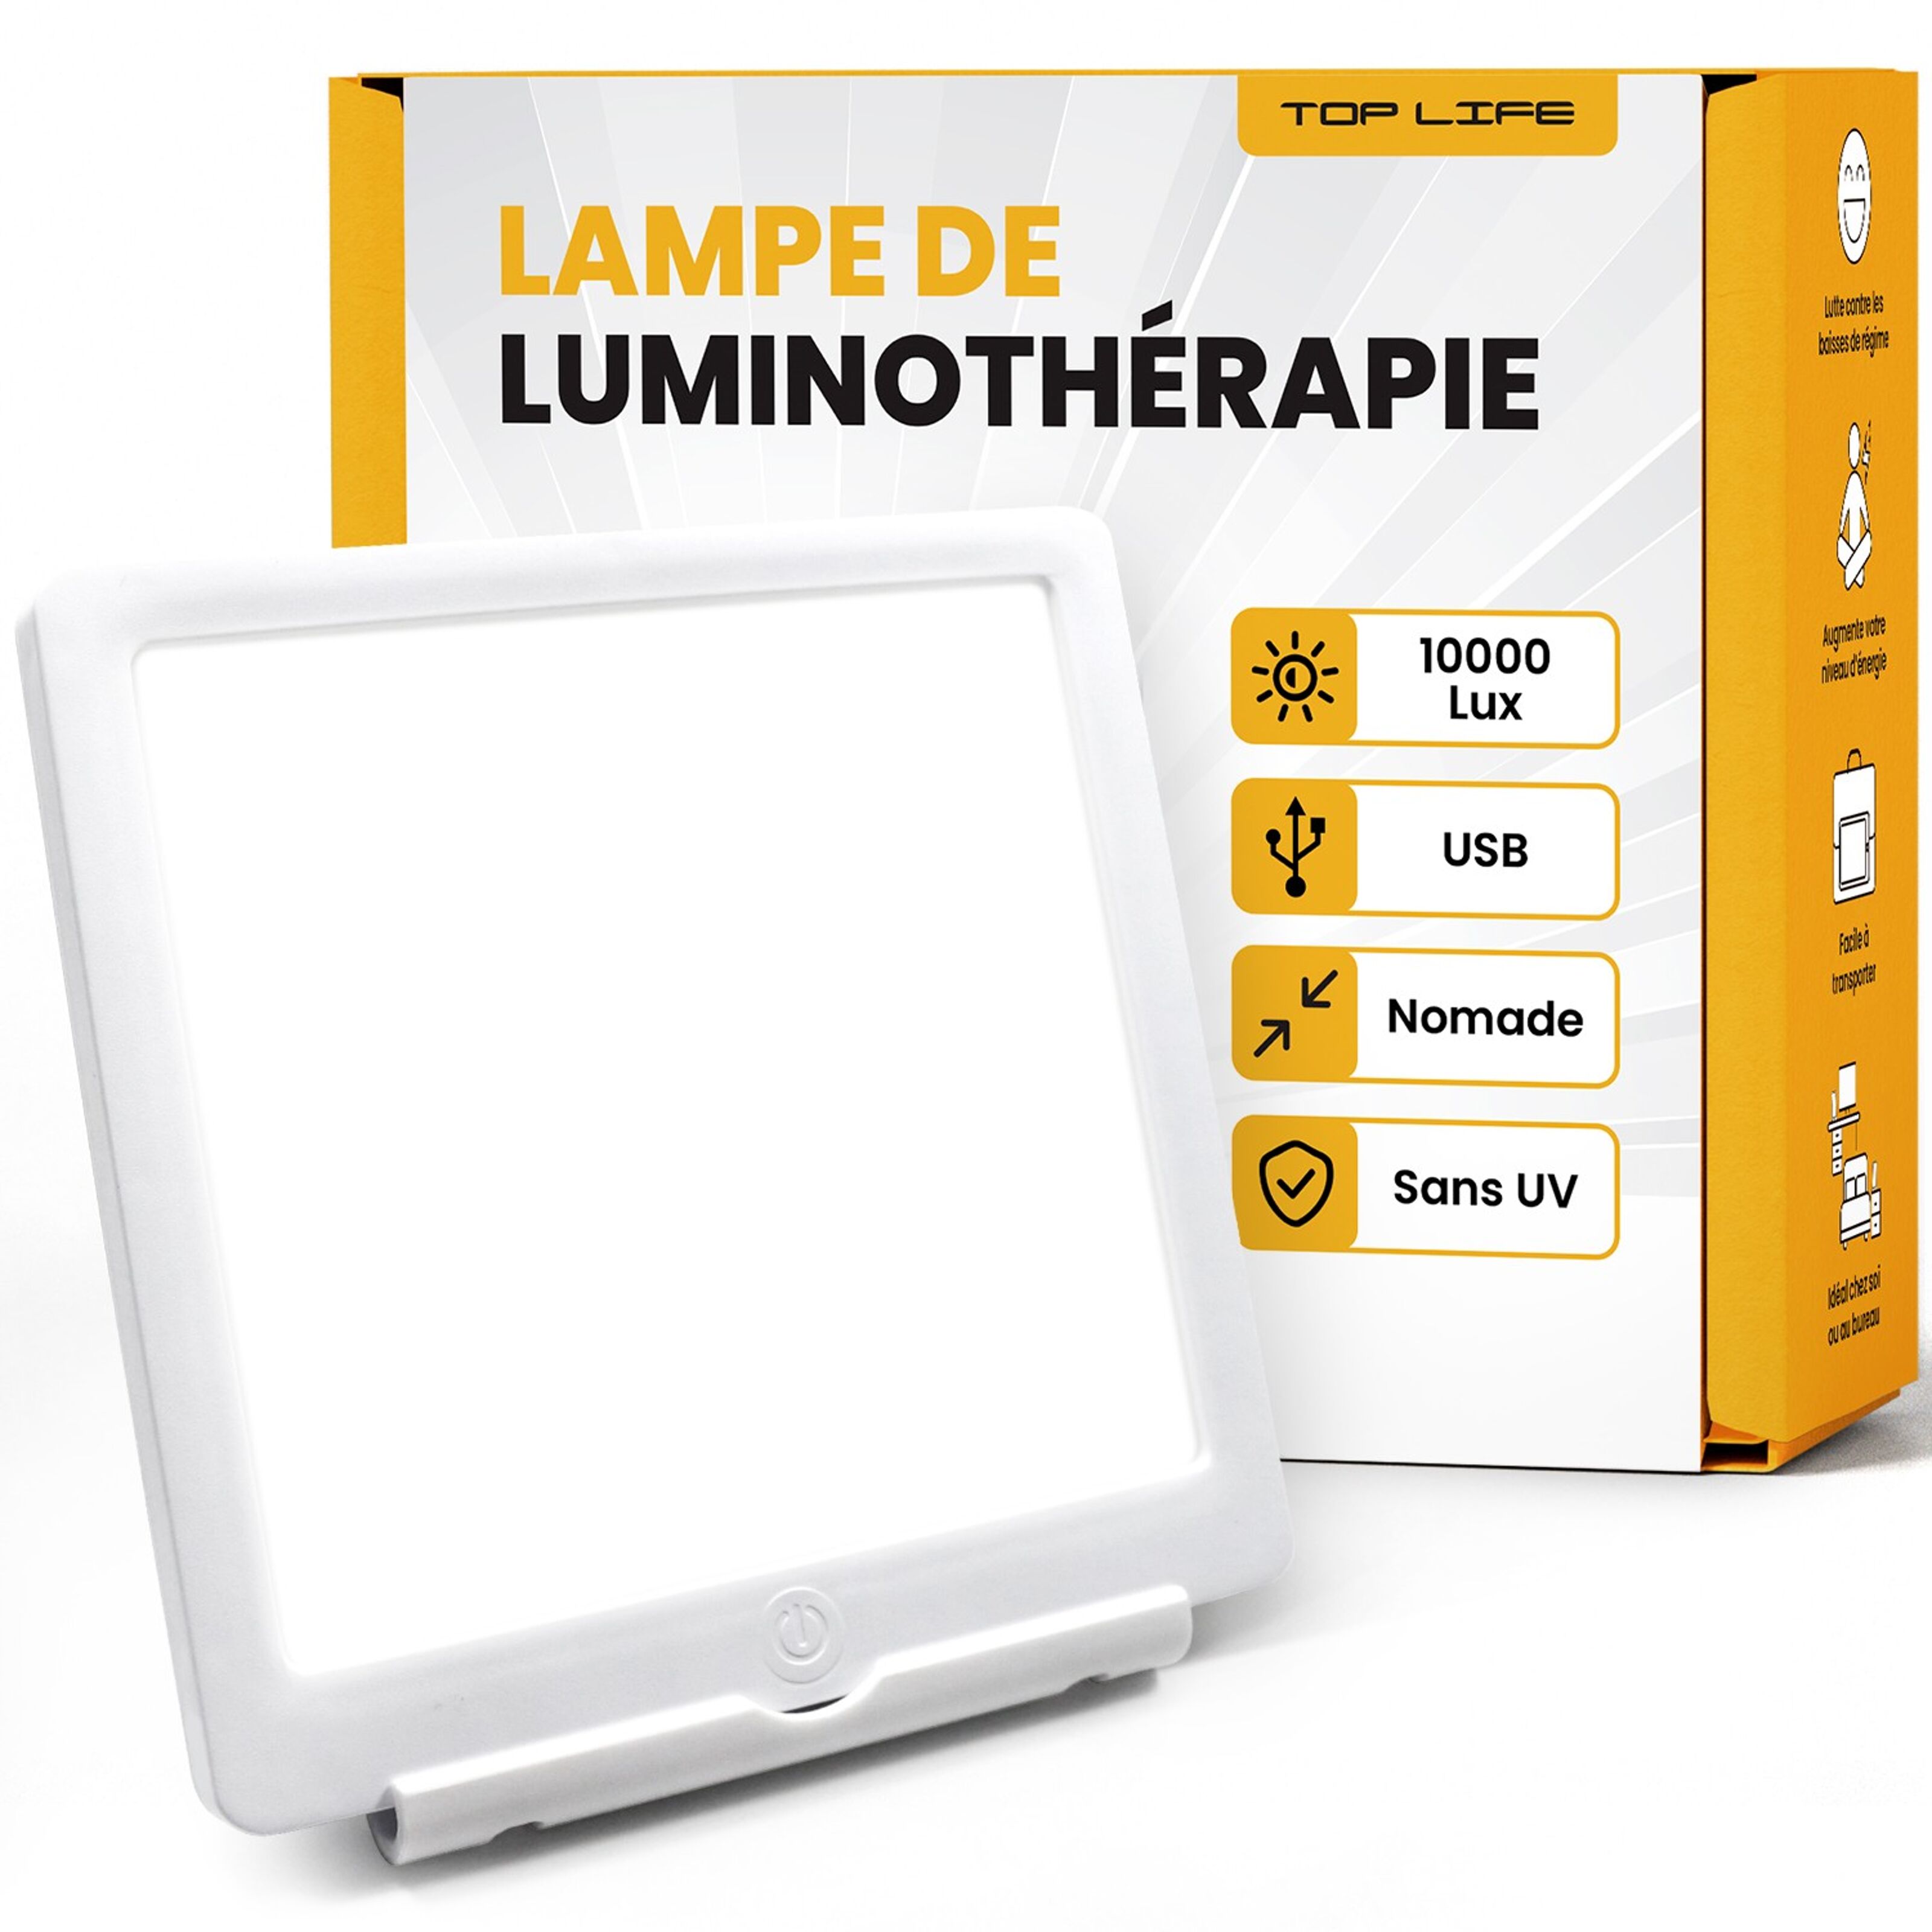 Lampe de luminothérapie 10000 Lux, lampe de luminothérapie avec 3